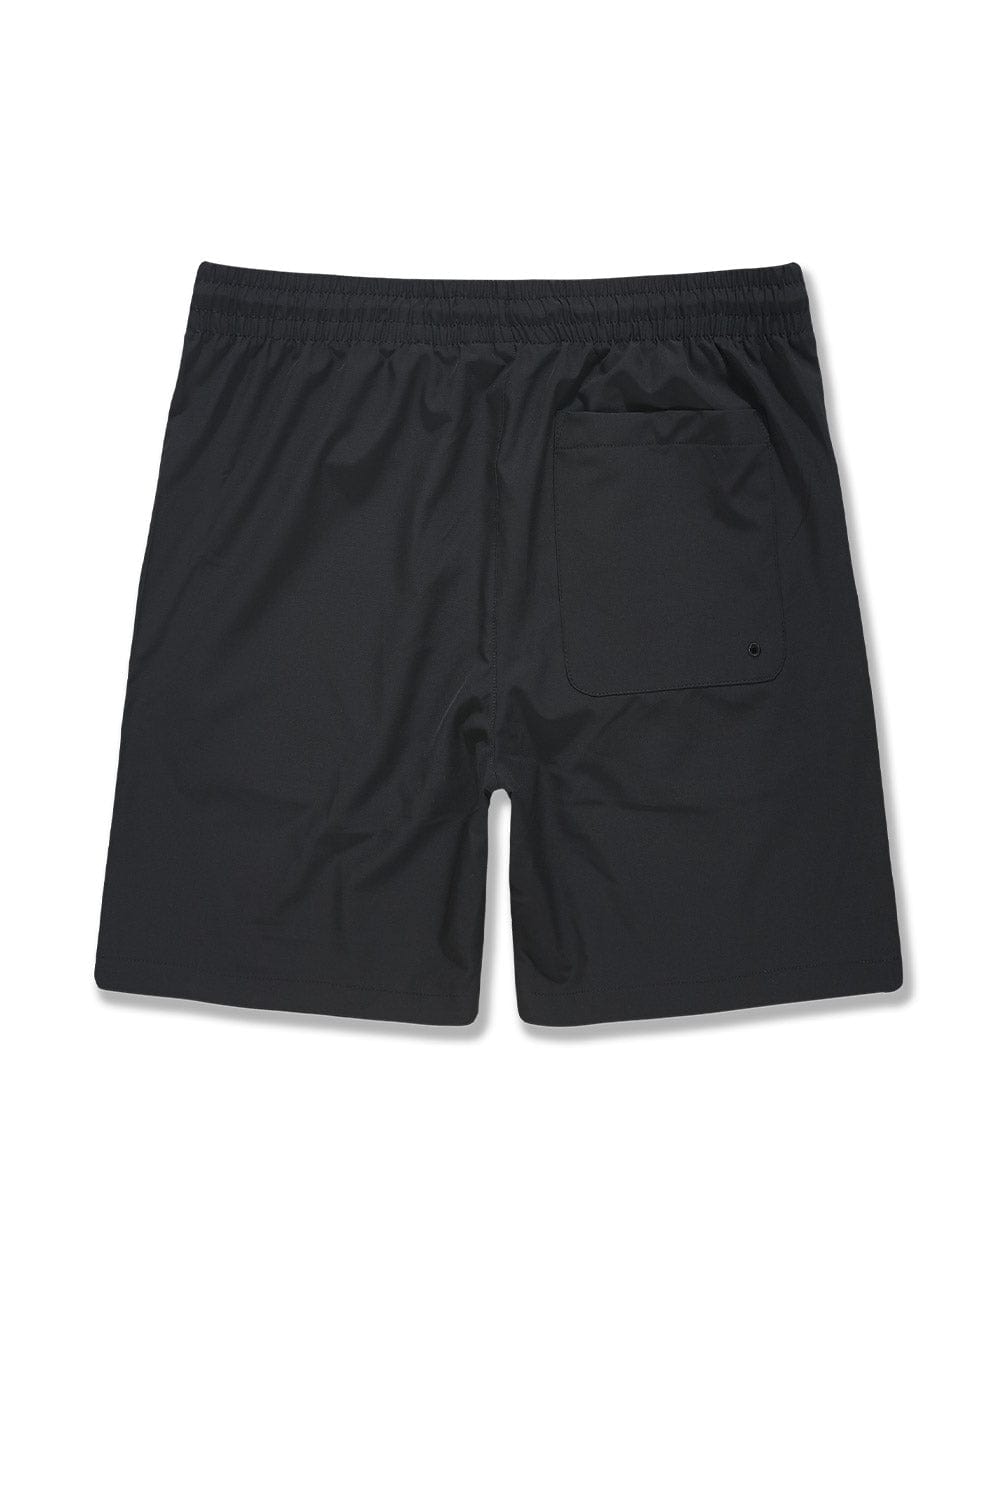 Jordan Craig Retro - Bay Area Shorts (Black)